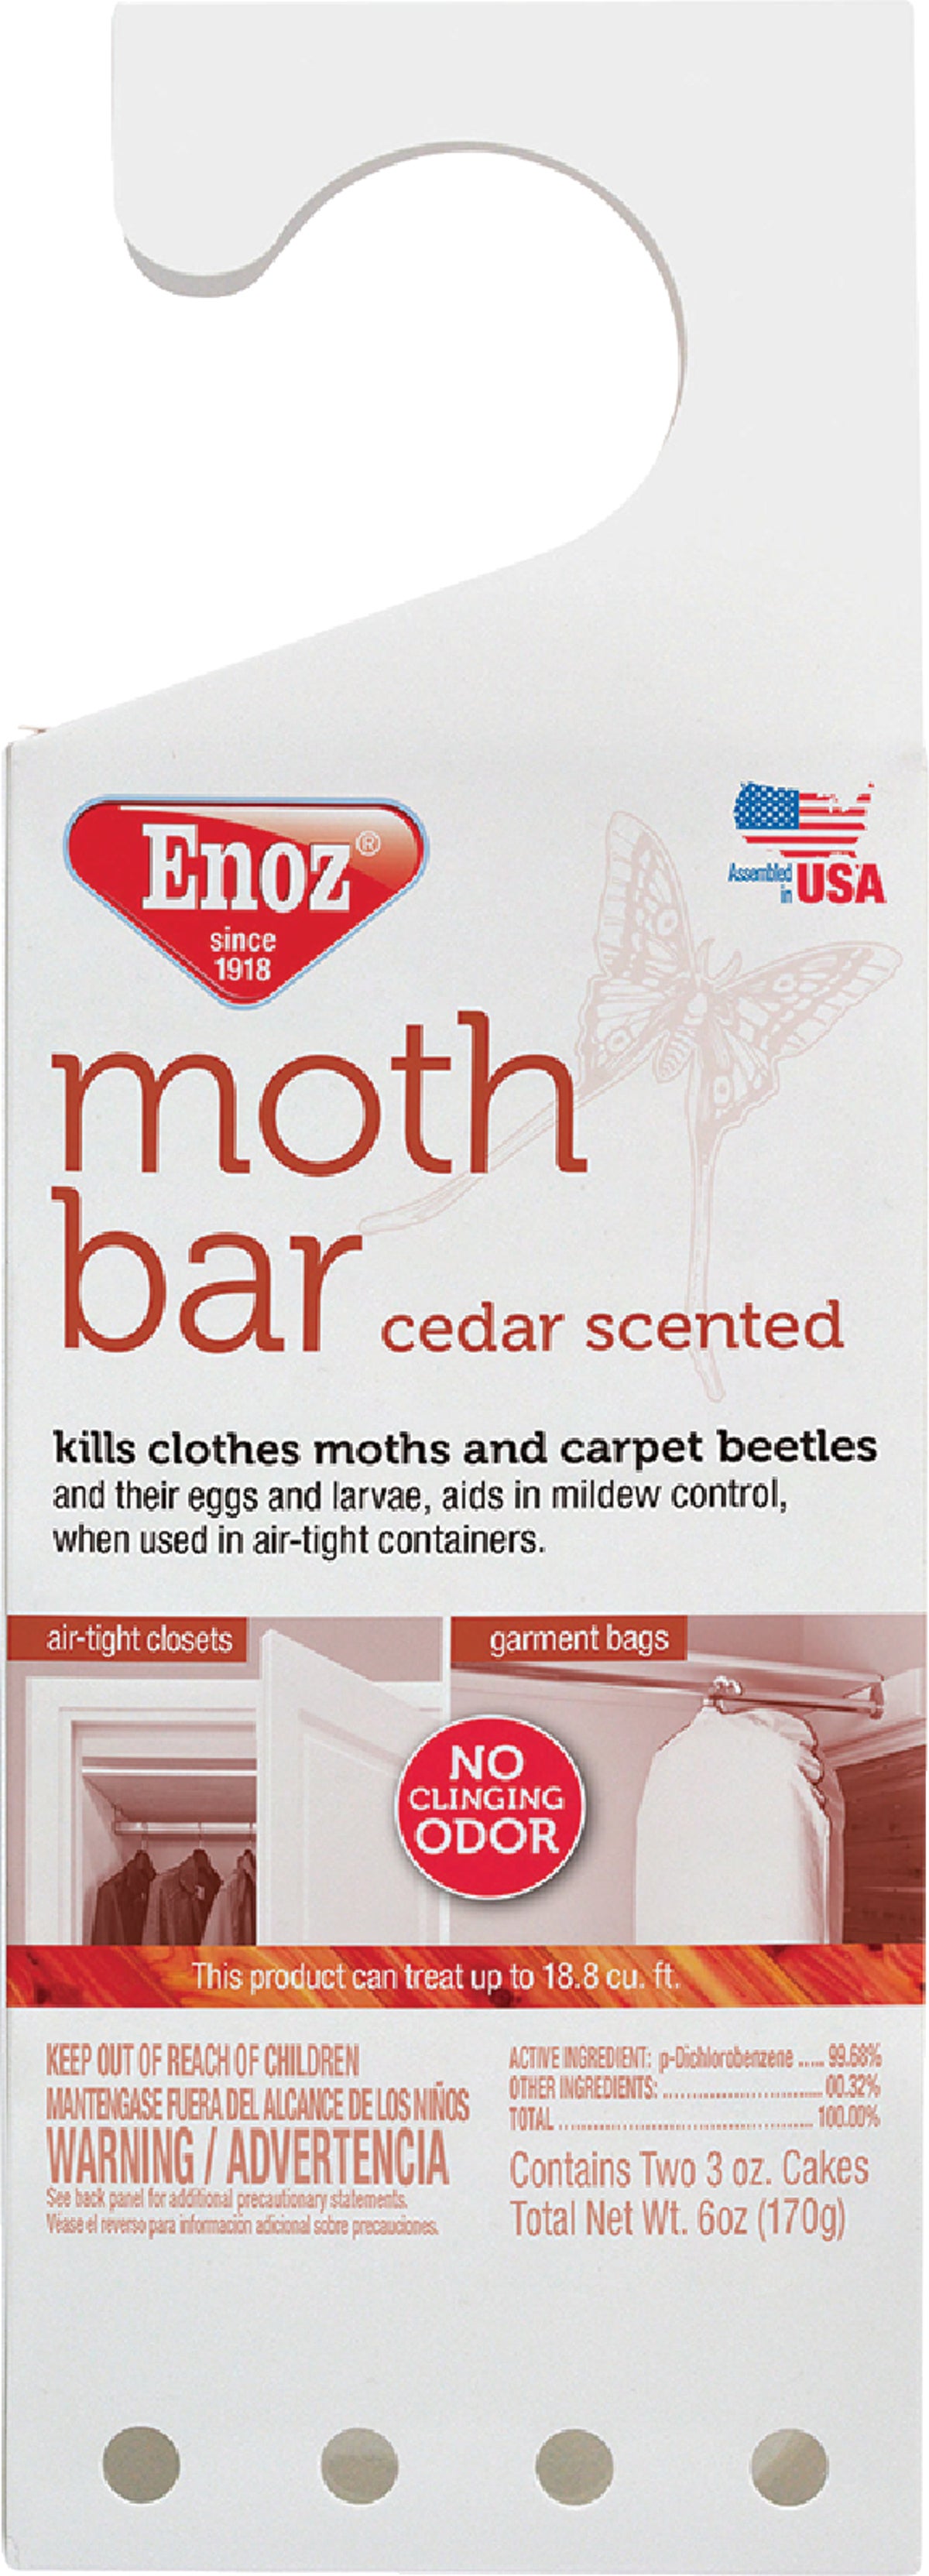 No-Moth Closet Hanger